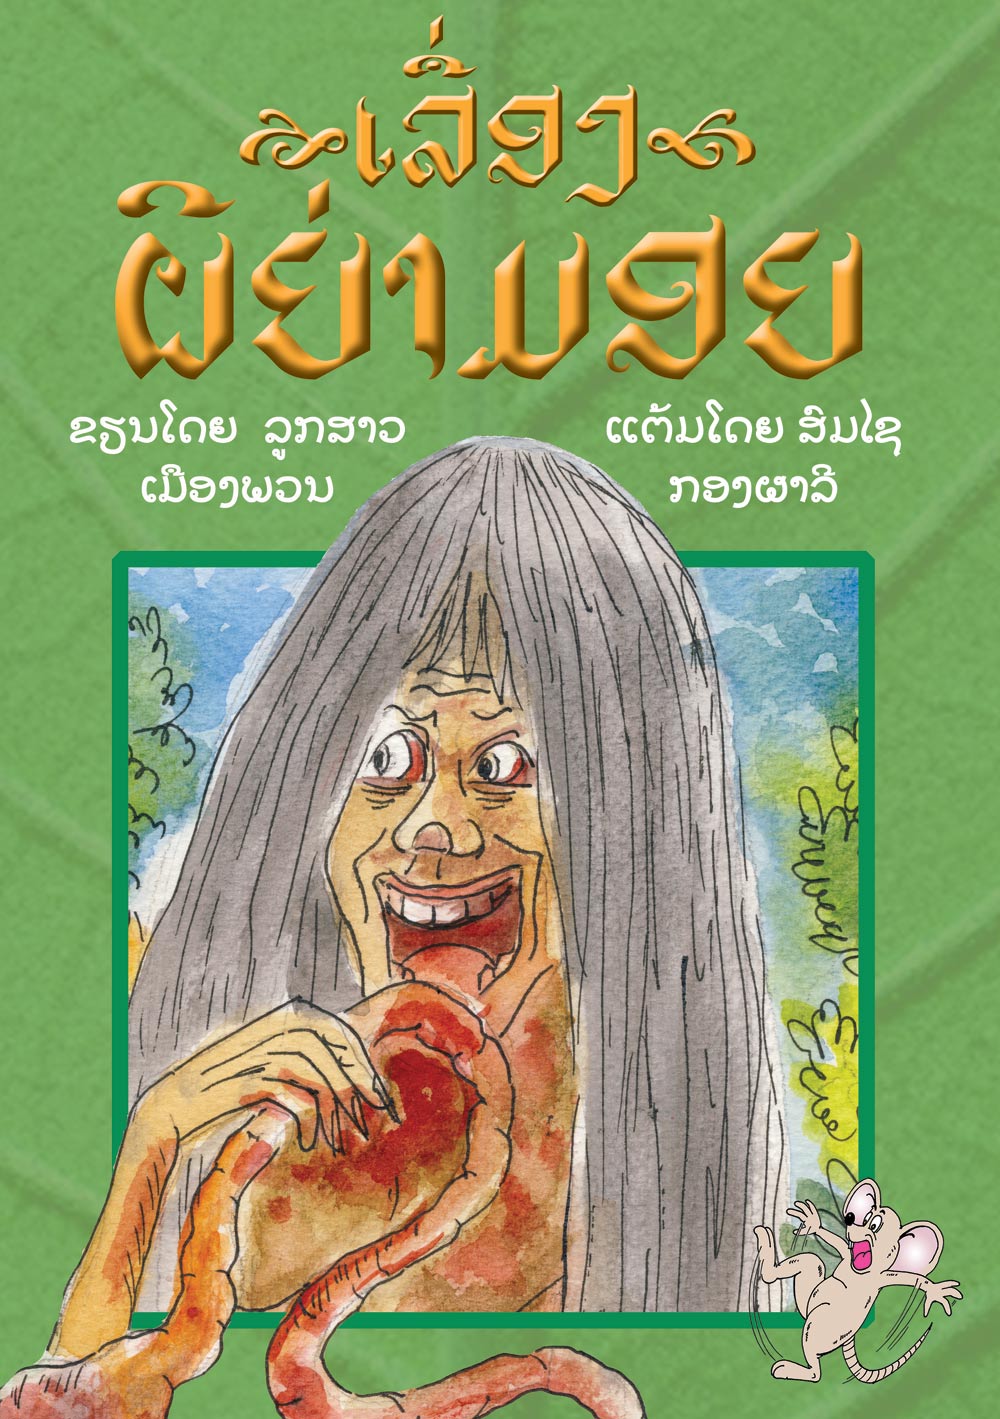 Phiiyamoi large book cover, published in Lao language